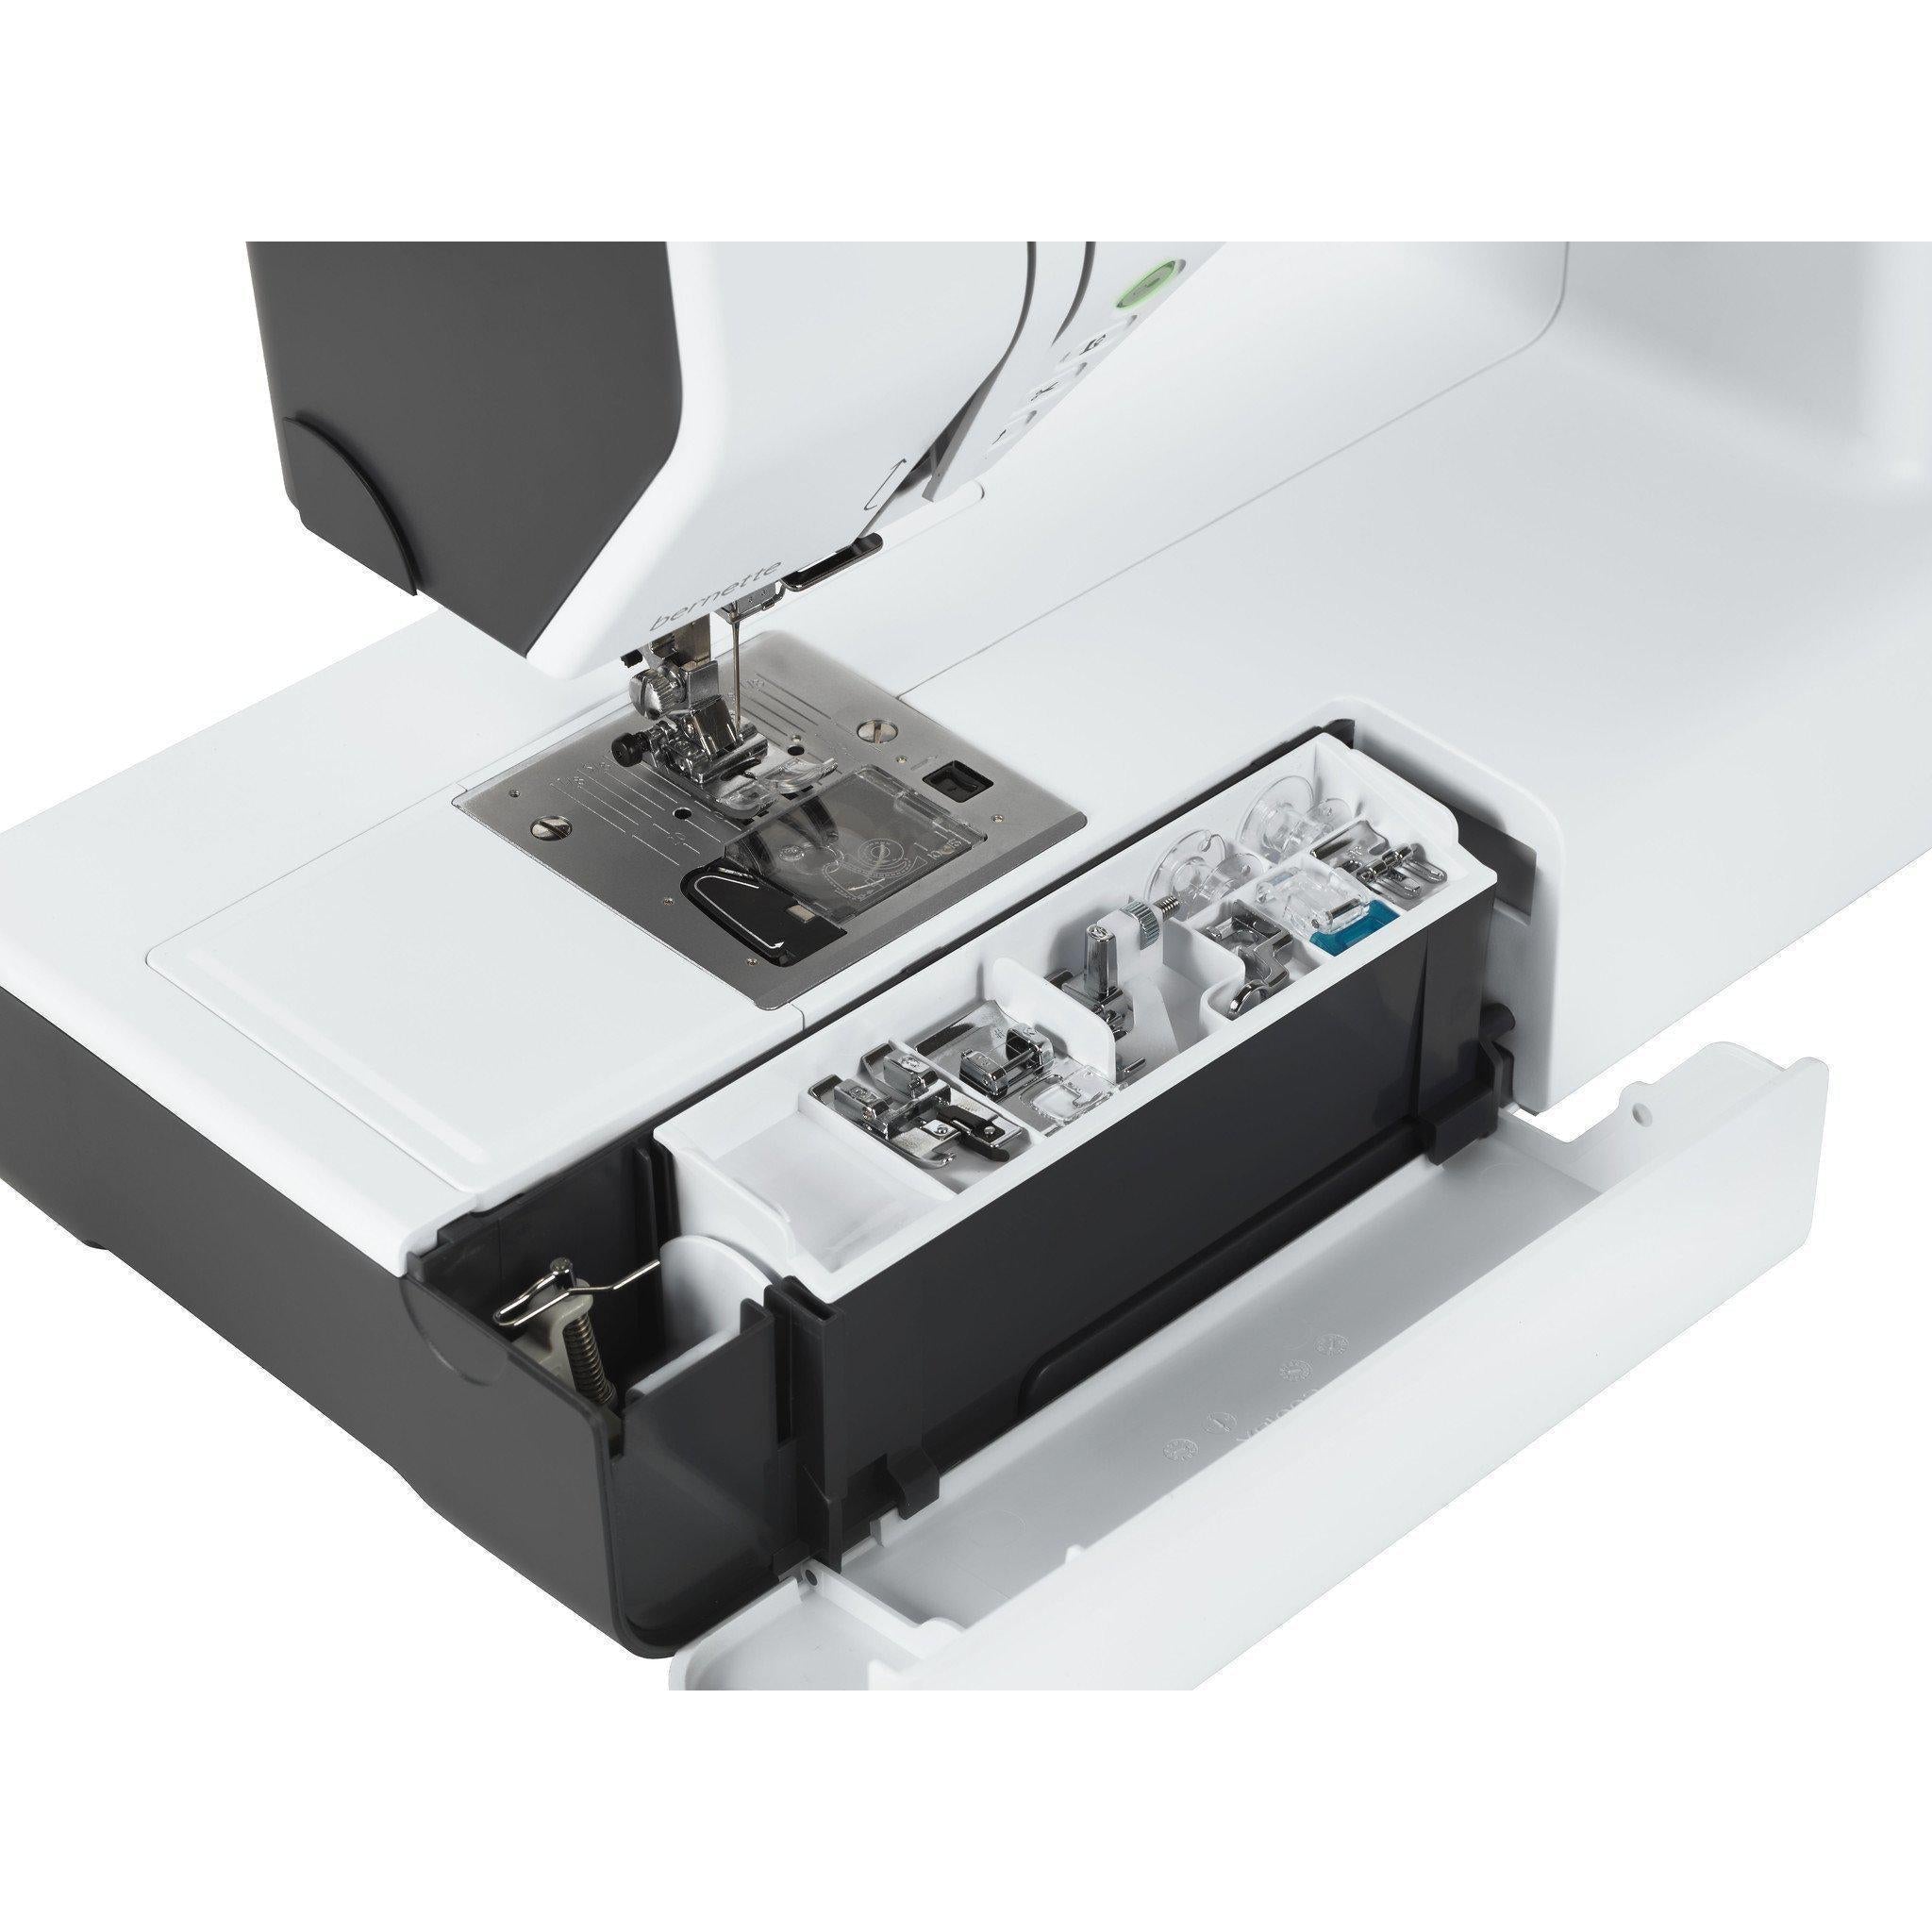 Bernette b77 Computerized Sewing Machine — Quilt Beginnings